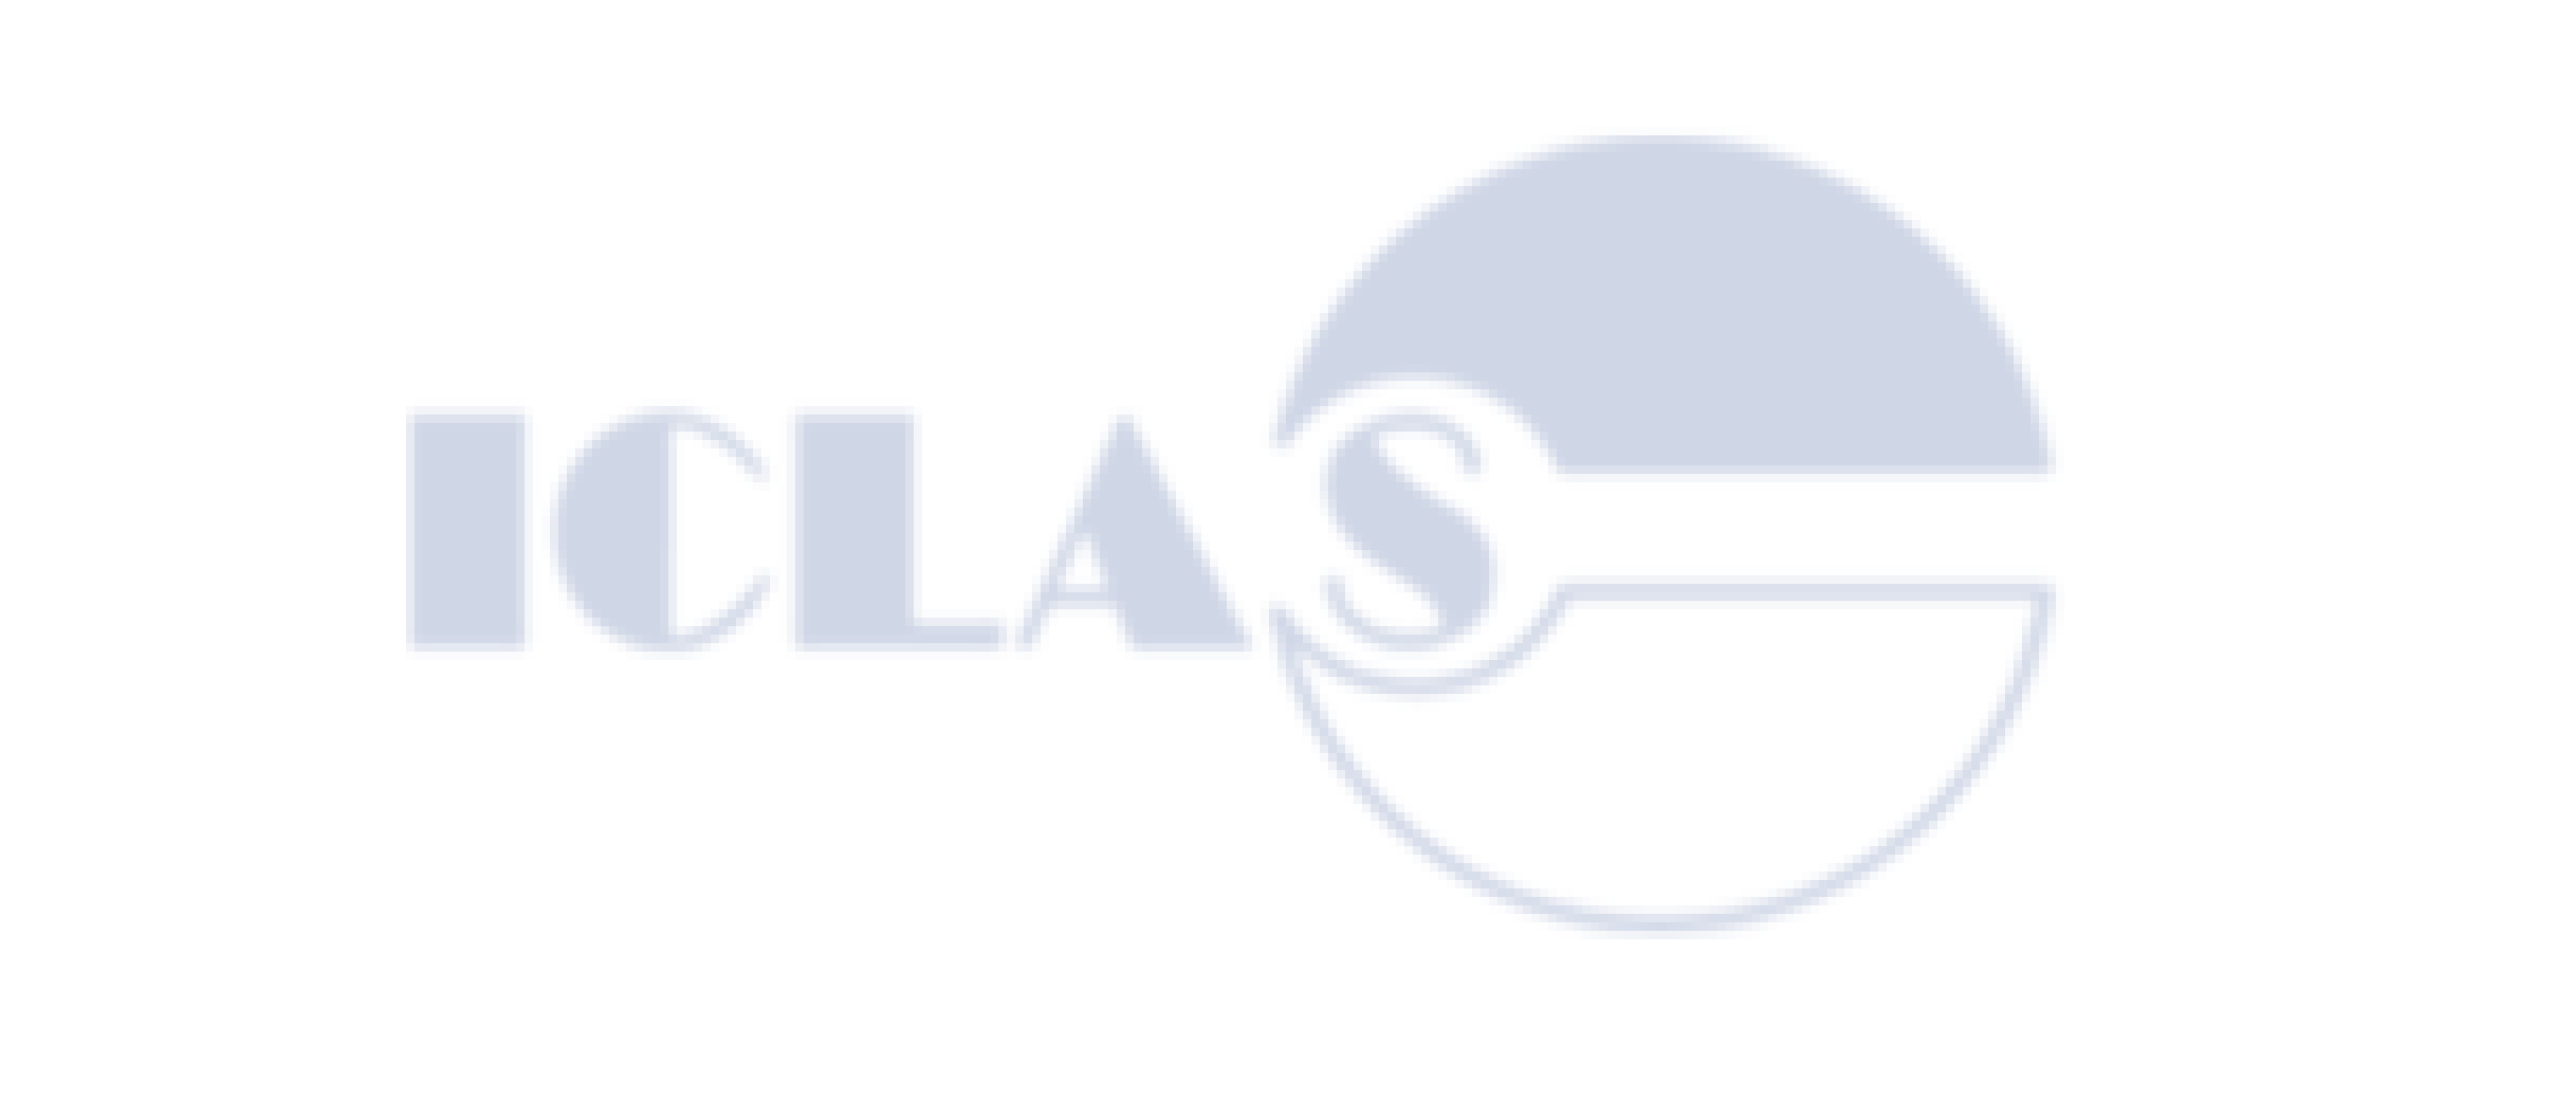 ICLAS News Report November 2021